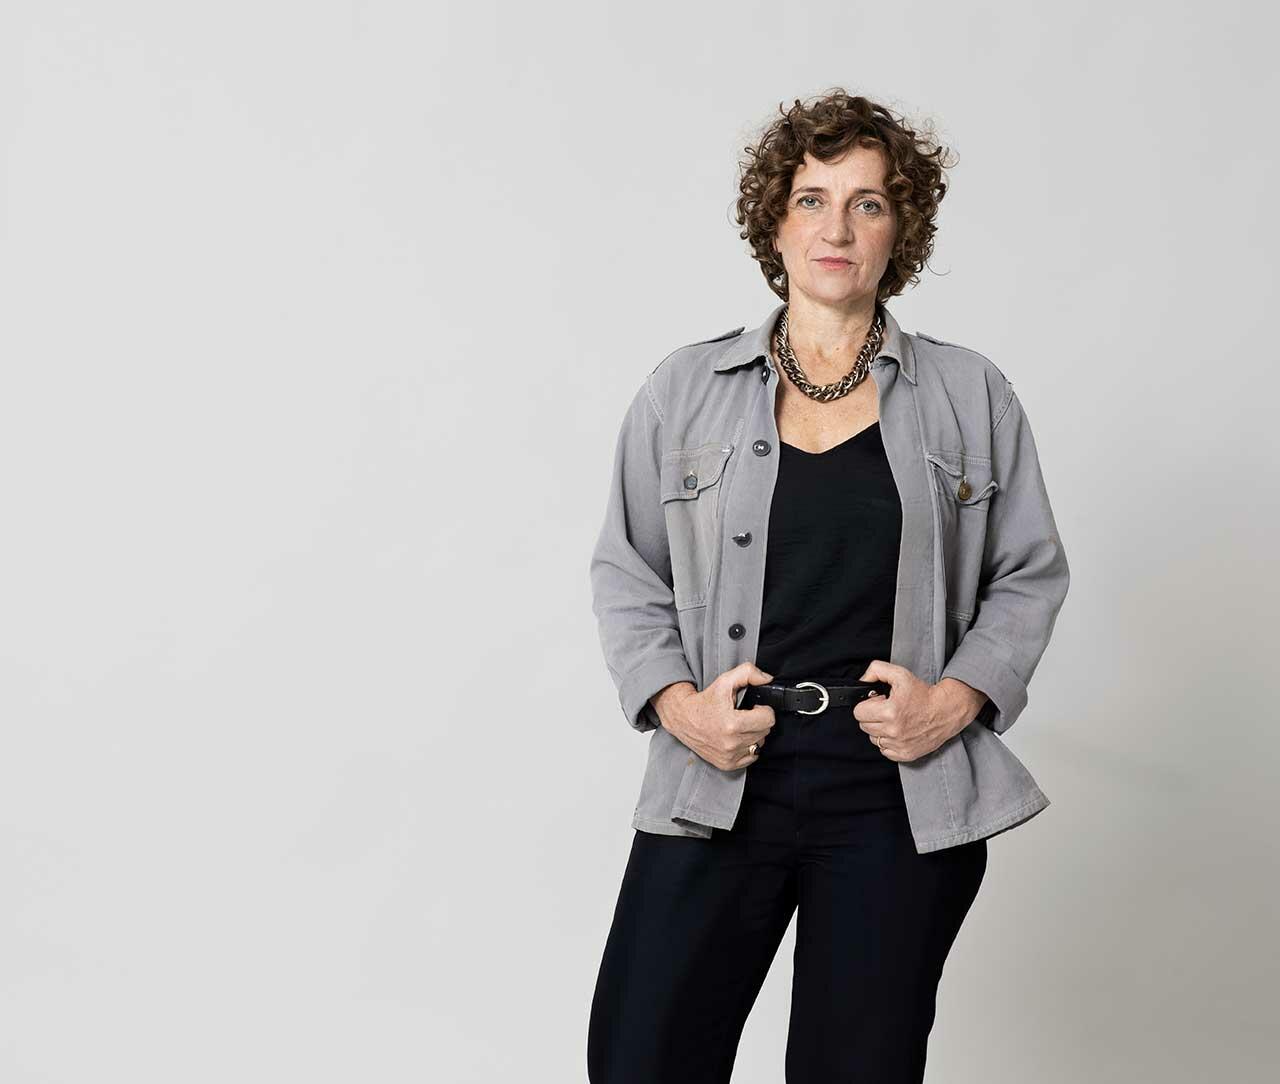 Tøjaktivisten Tina Werborg klædt i skjorte og bukser